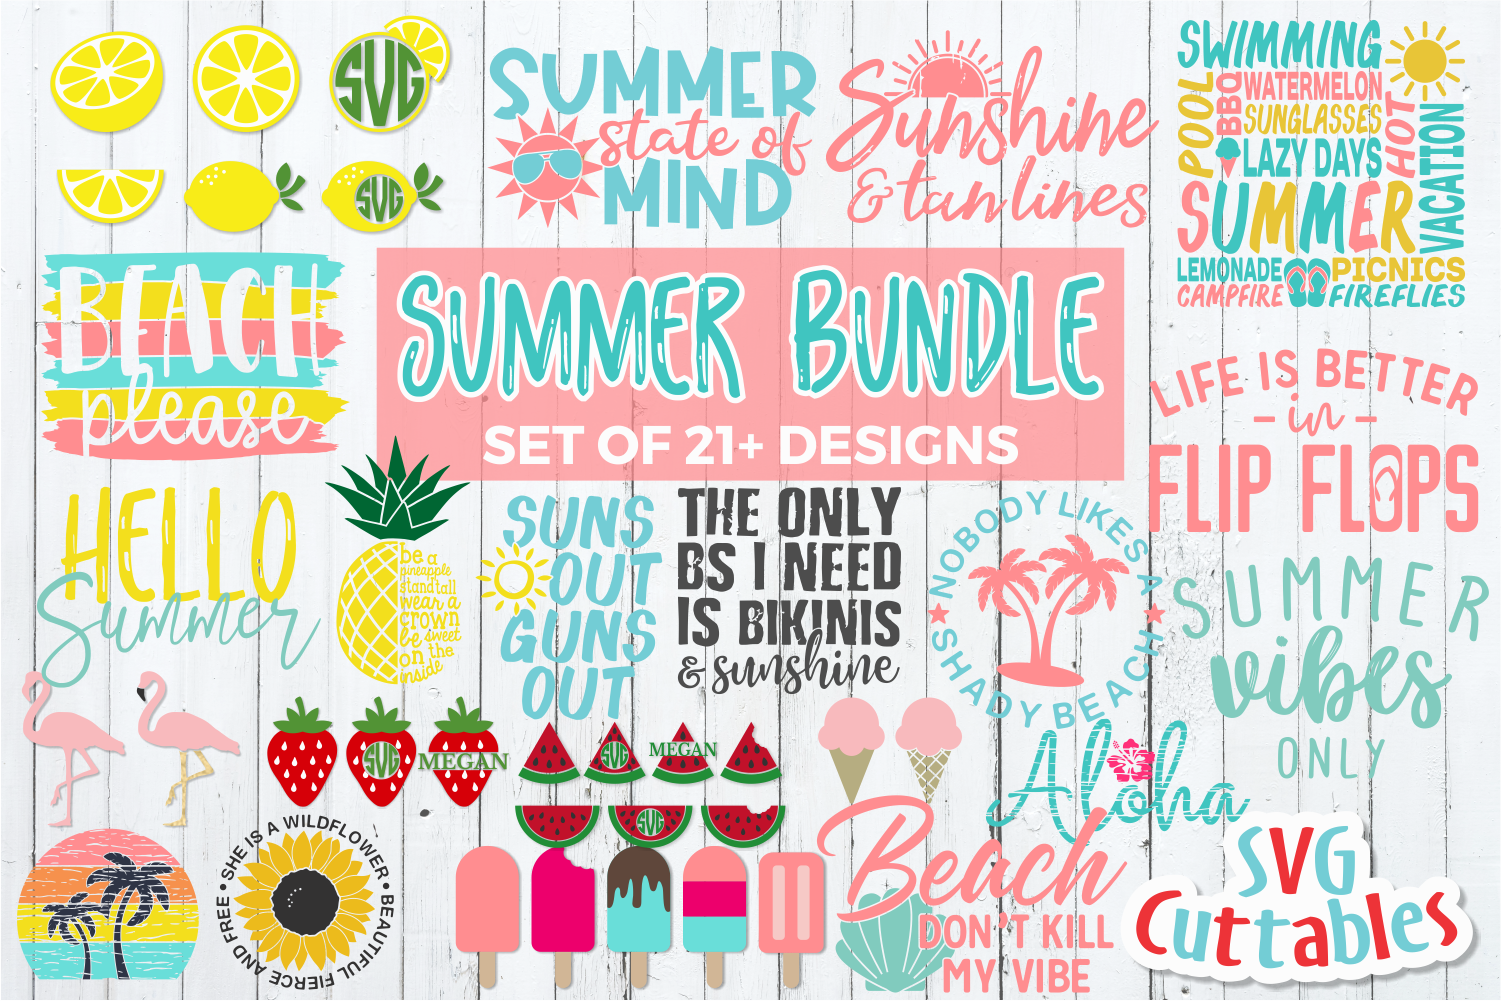 Download Summer Bundle | Shirt Designs | SVG Cut File By Svg Cuttables | TheHungryJPEG.com